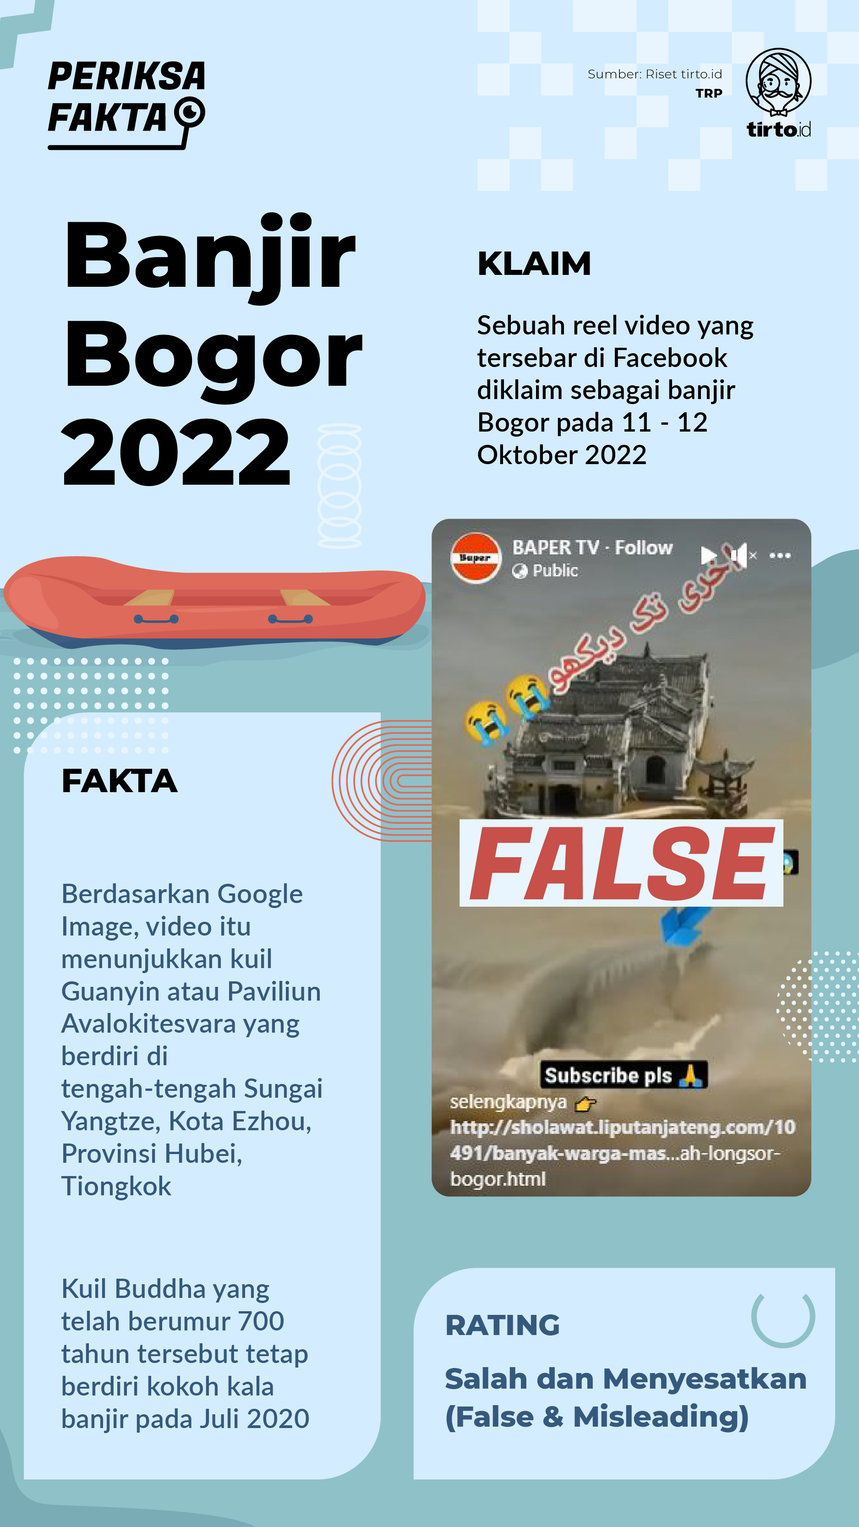 Infografik Perikasa Fakta Banjir Bogor 2022